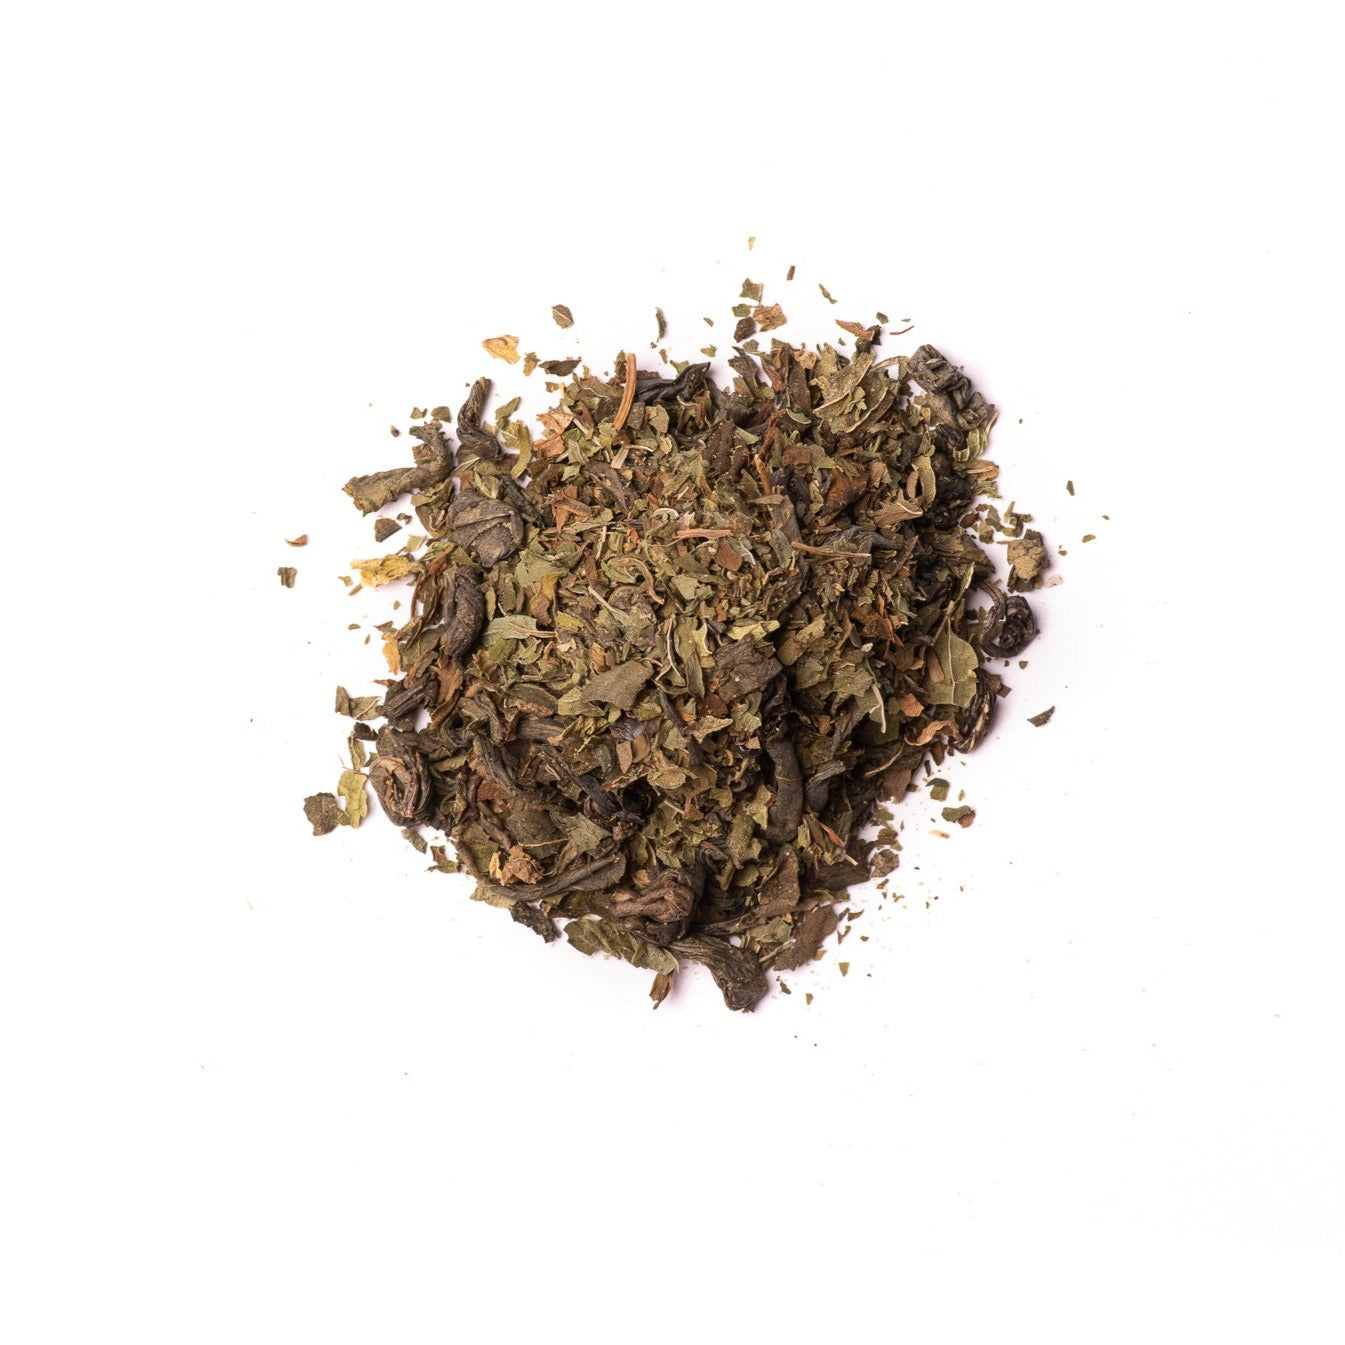 Pile of mint CBD tea leaves from Four Twentea